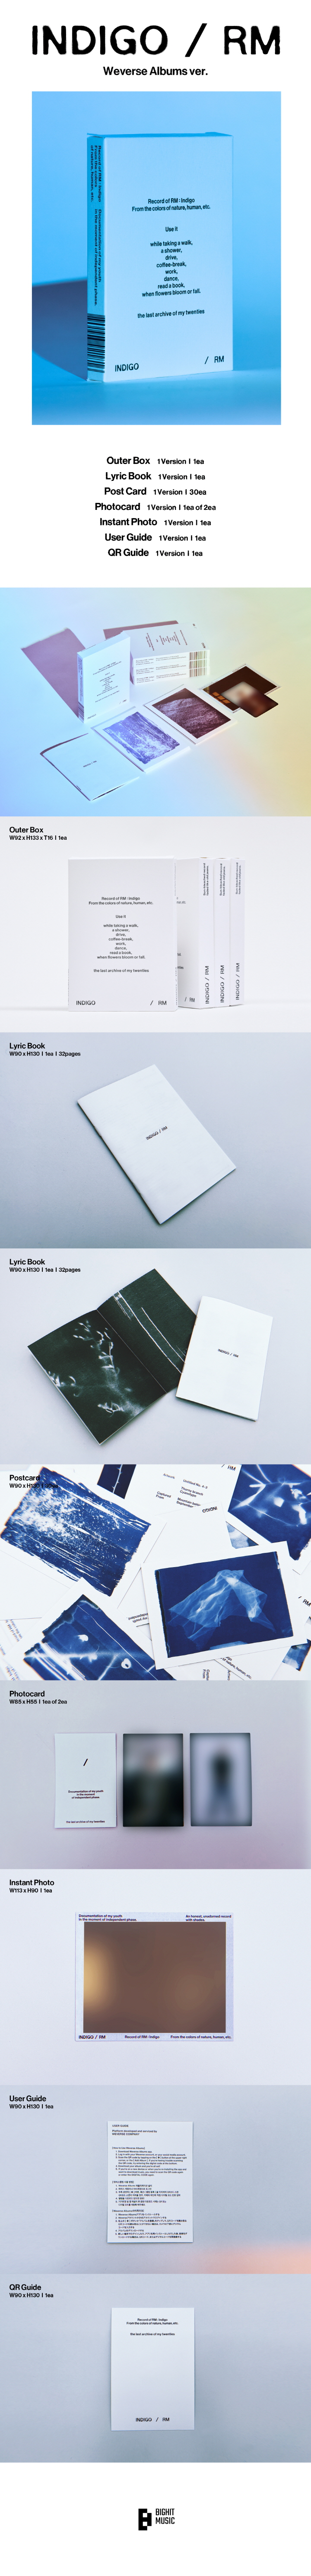 RM   Indigo  Postcard Edition  Weverse Albums ver 